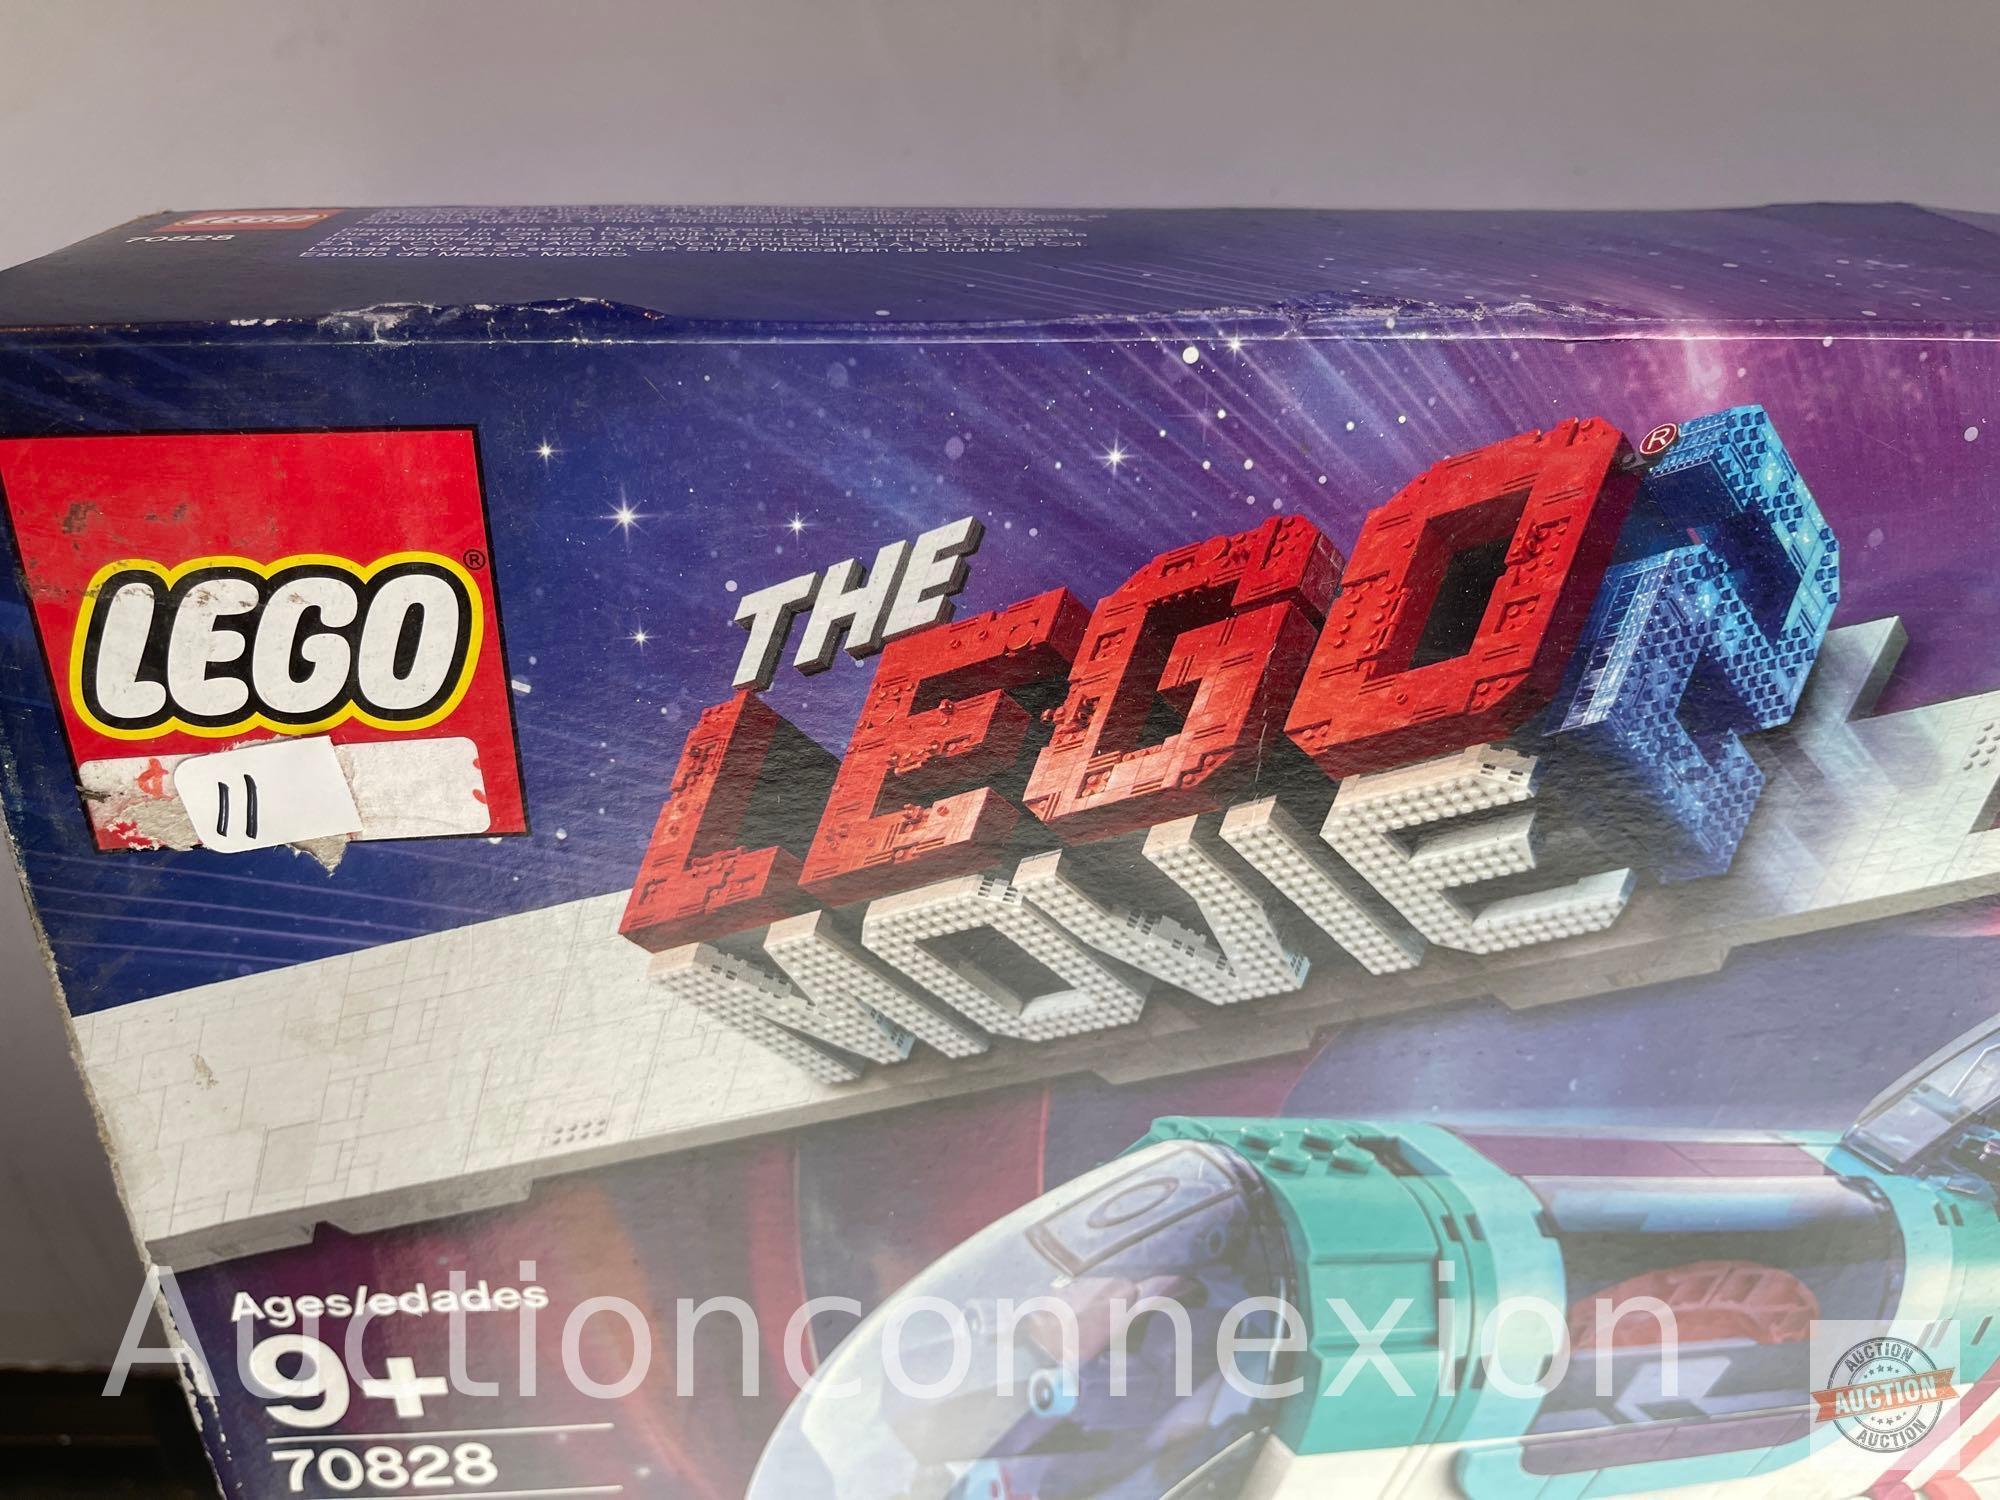 Lego - The Lego Movie 2